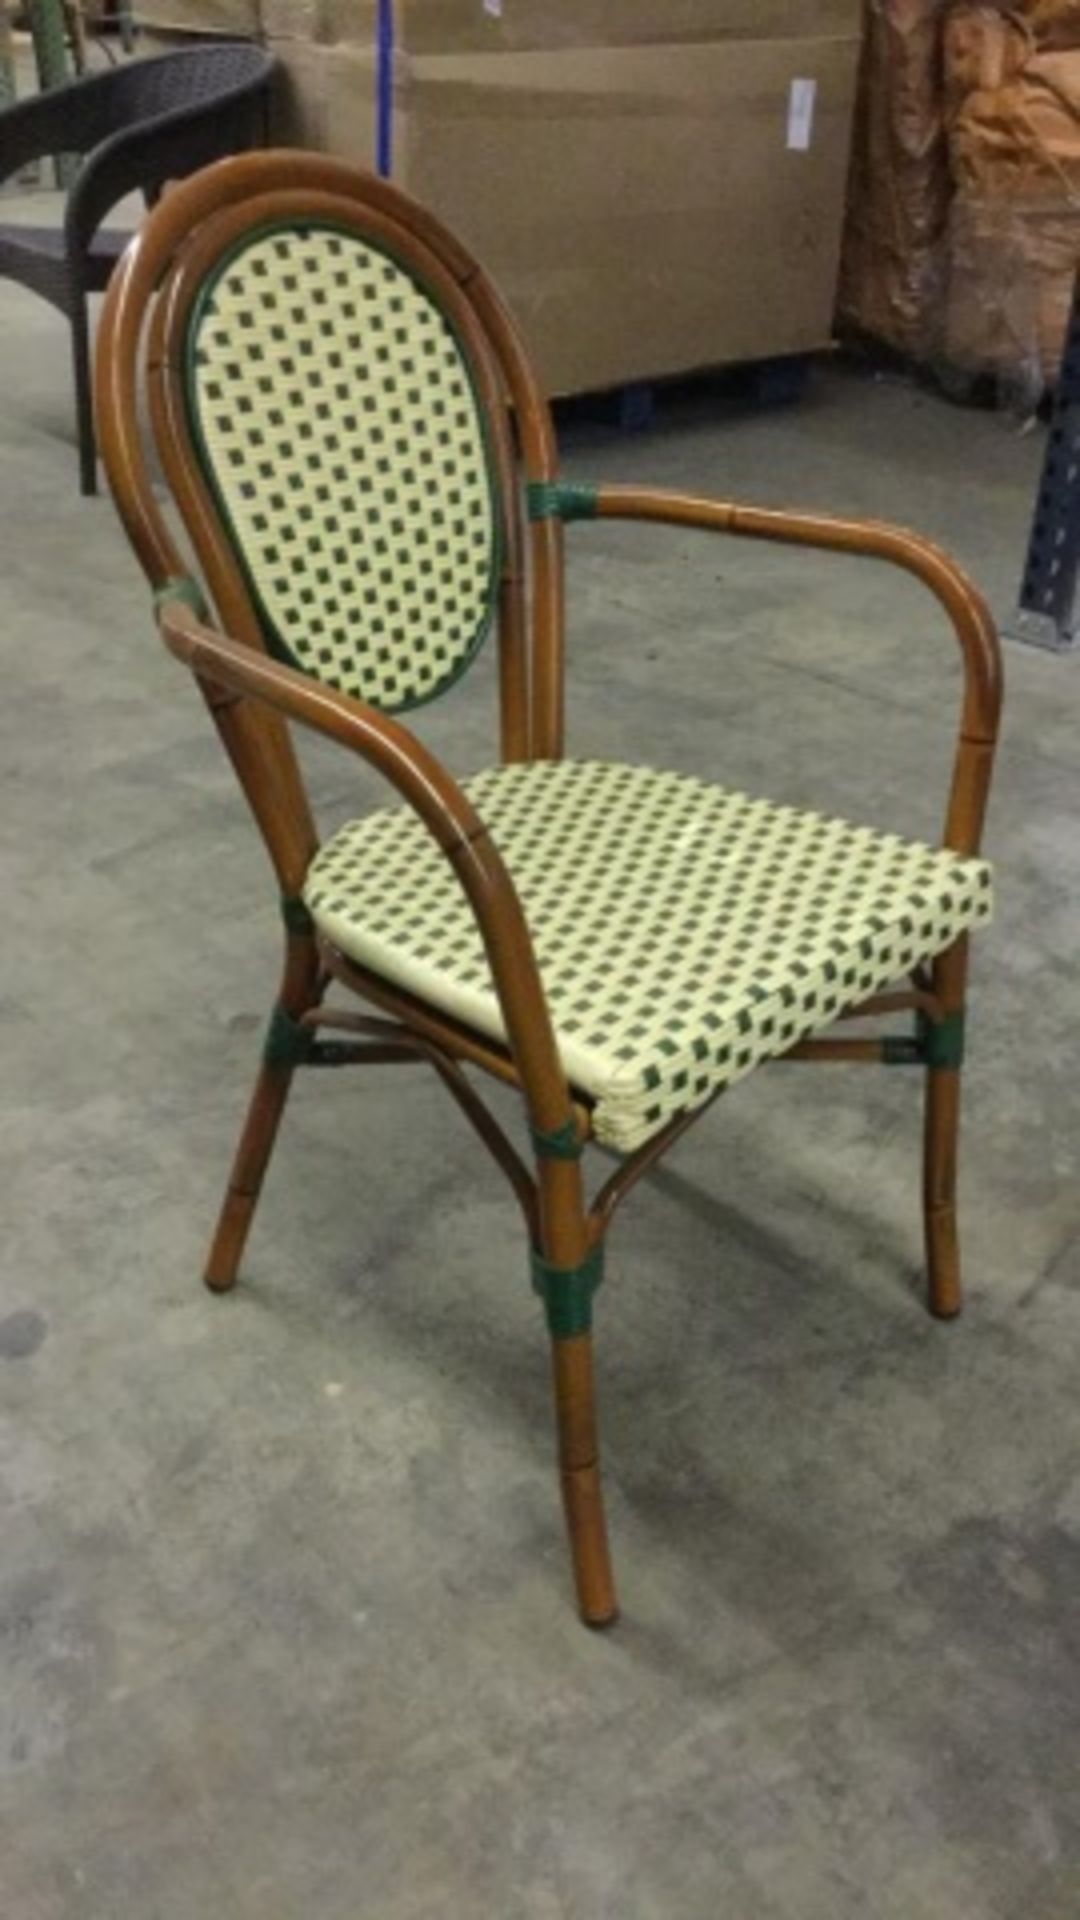 Parisienne Arm Chair - Ivory/Green. A57-AC-IG, PE Weave on Tubular Aluminum Frame/Powder coat finish - Image 4 of 6